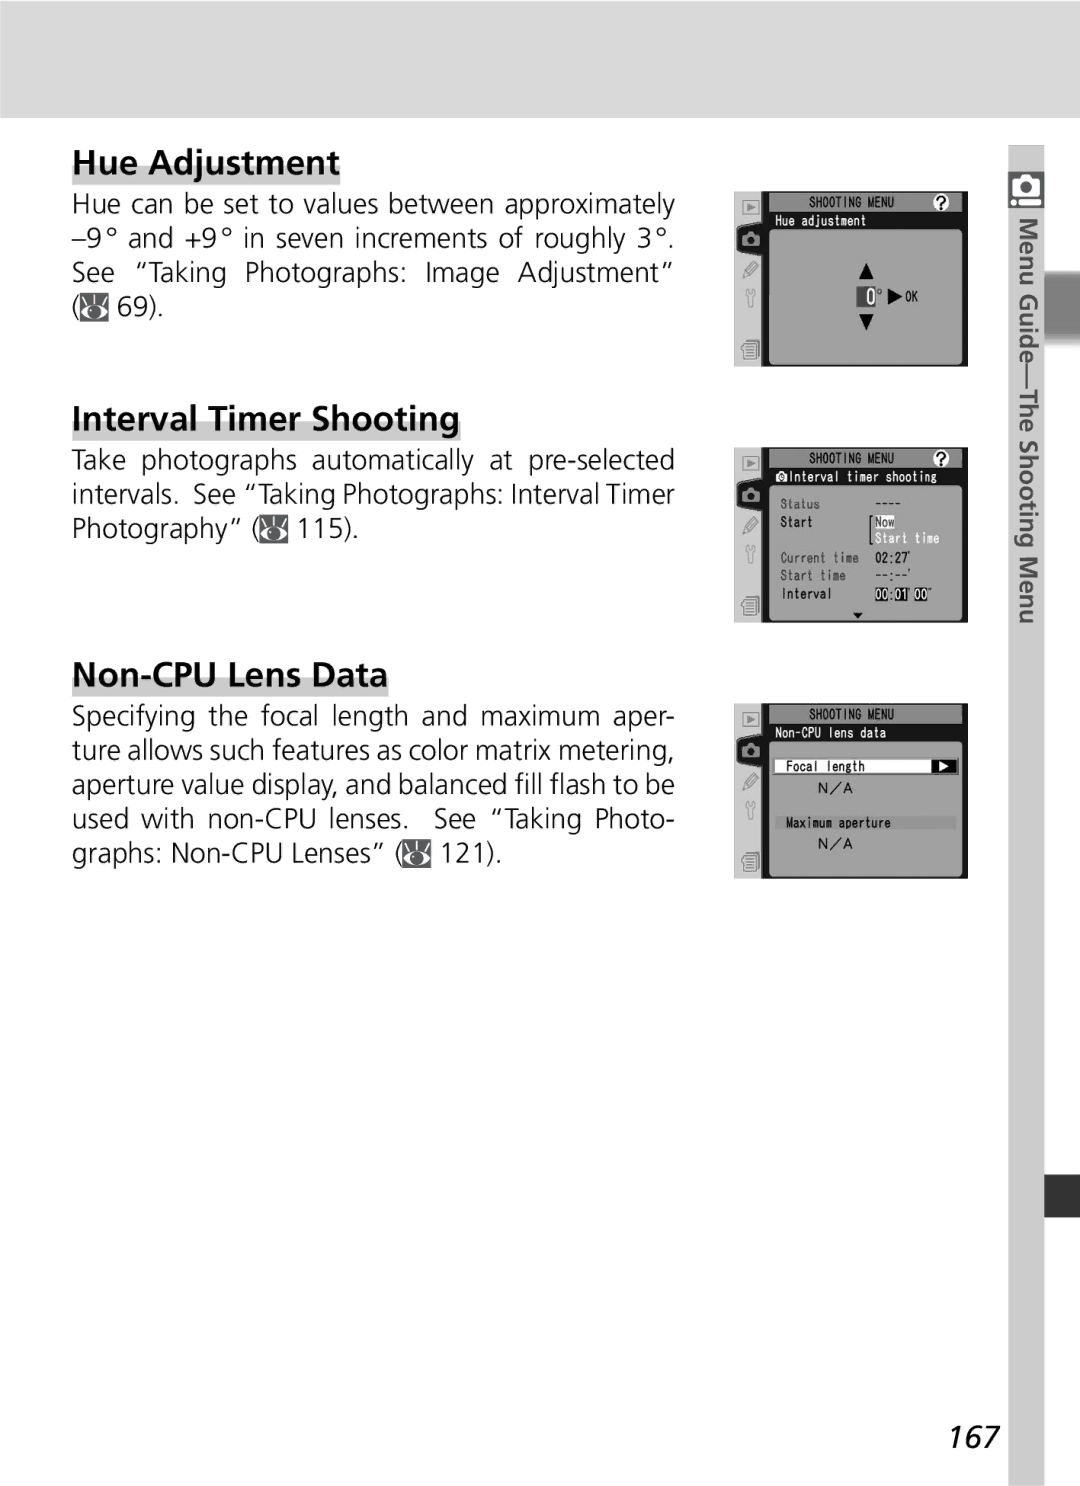 Nikon D2Hs manual Hue Adjustment, Interval Timer Shooting, Non-CPU Lens Data, 167 